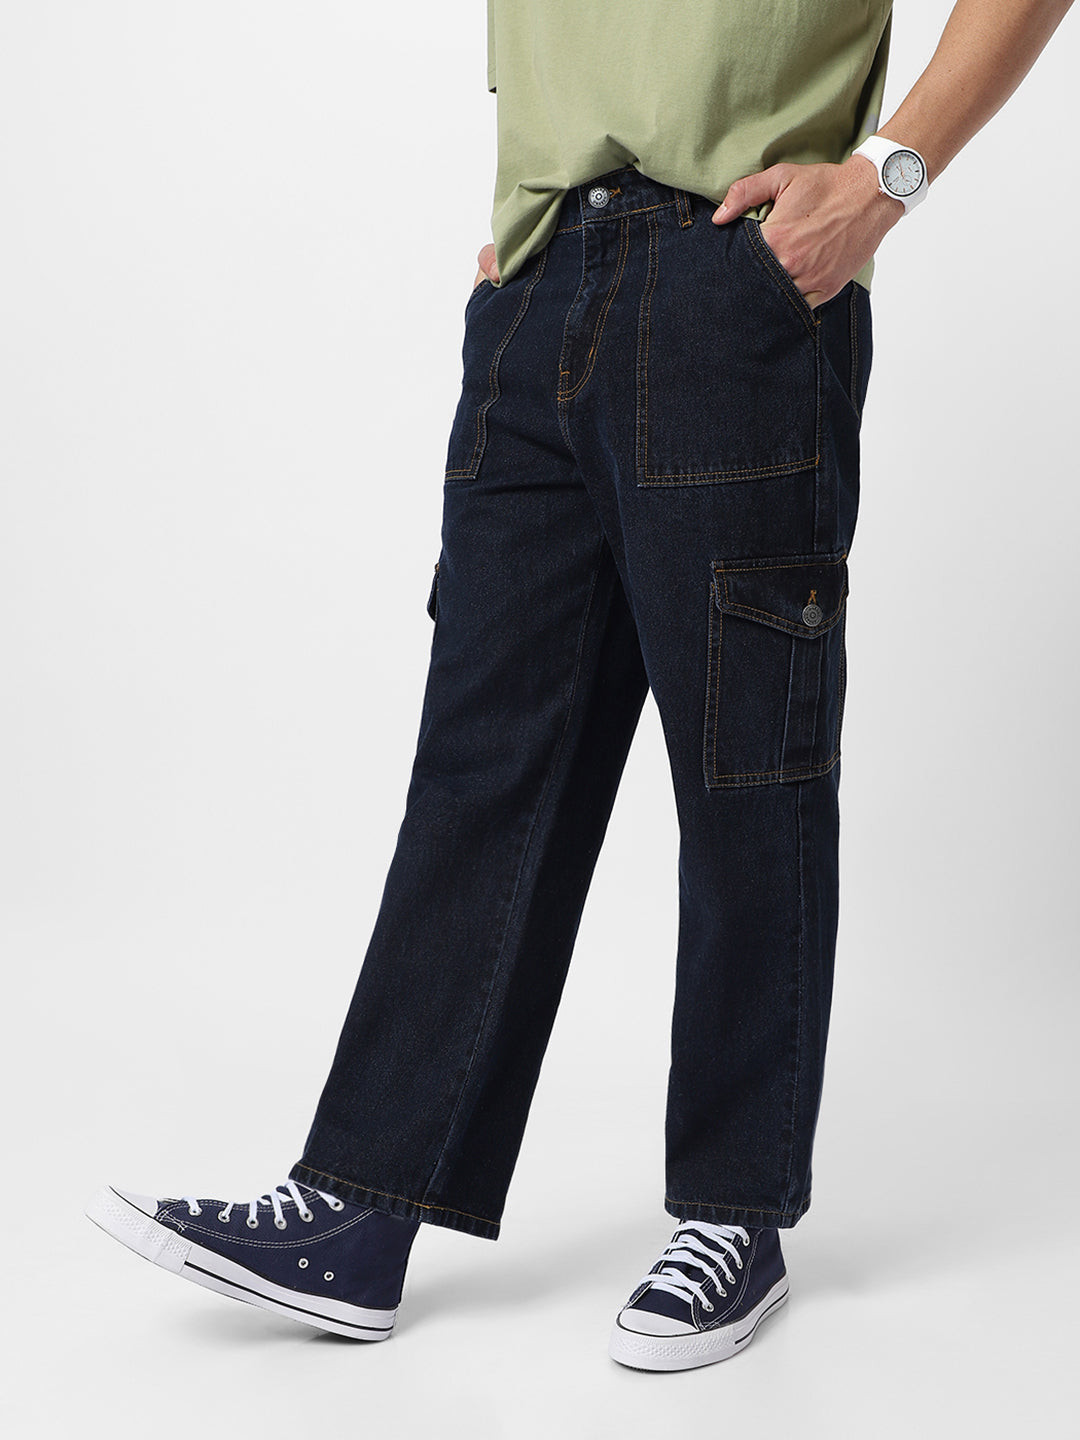 Urbano Fashion Slim Men Grey Jeans - Buy Grey Urbano Fashion Slim Men Grey  Jeans Online at Best Prices in India